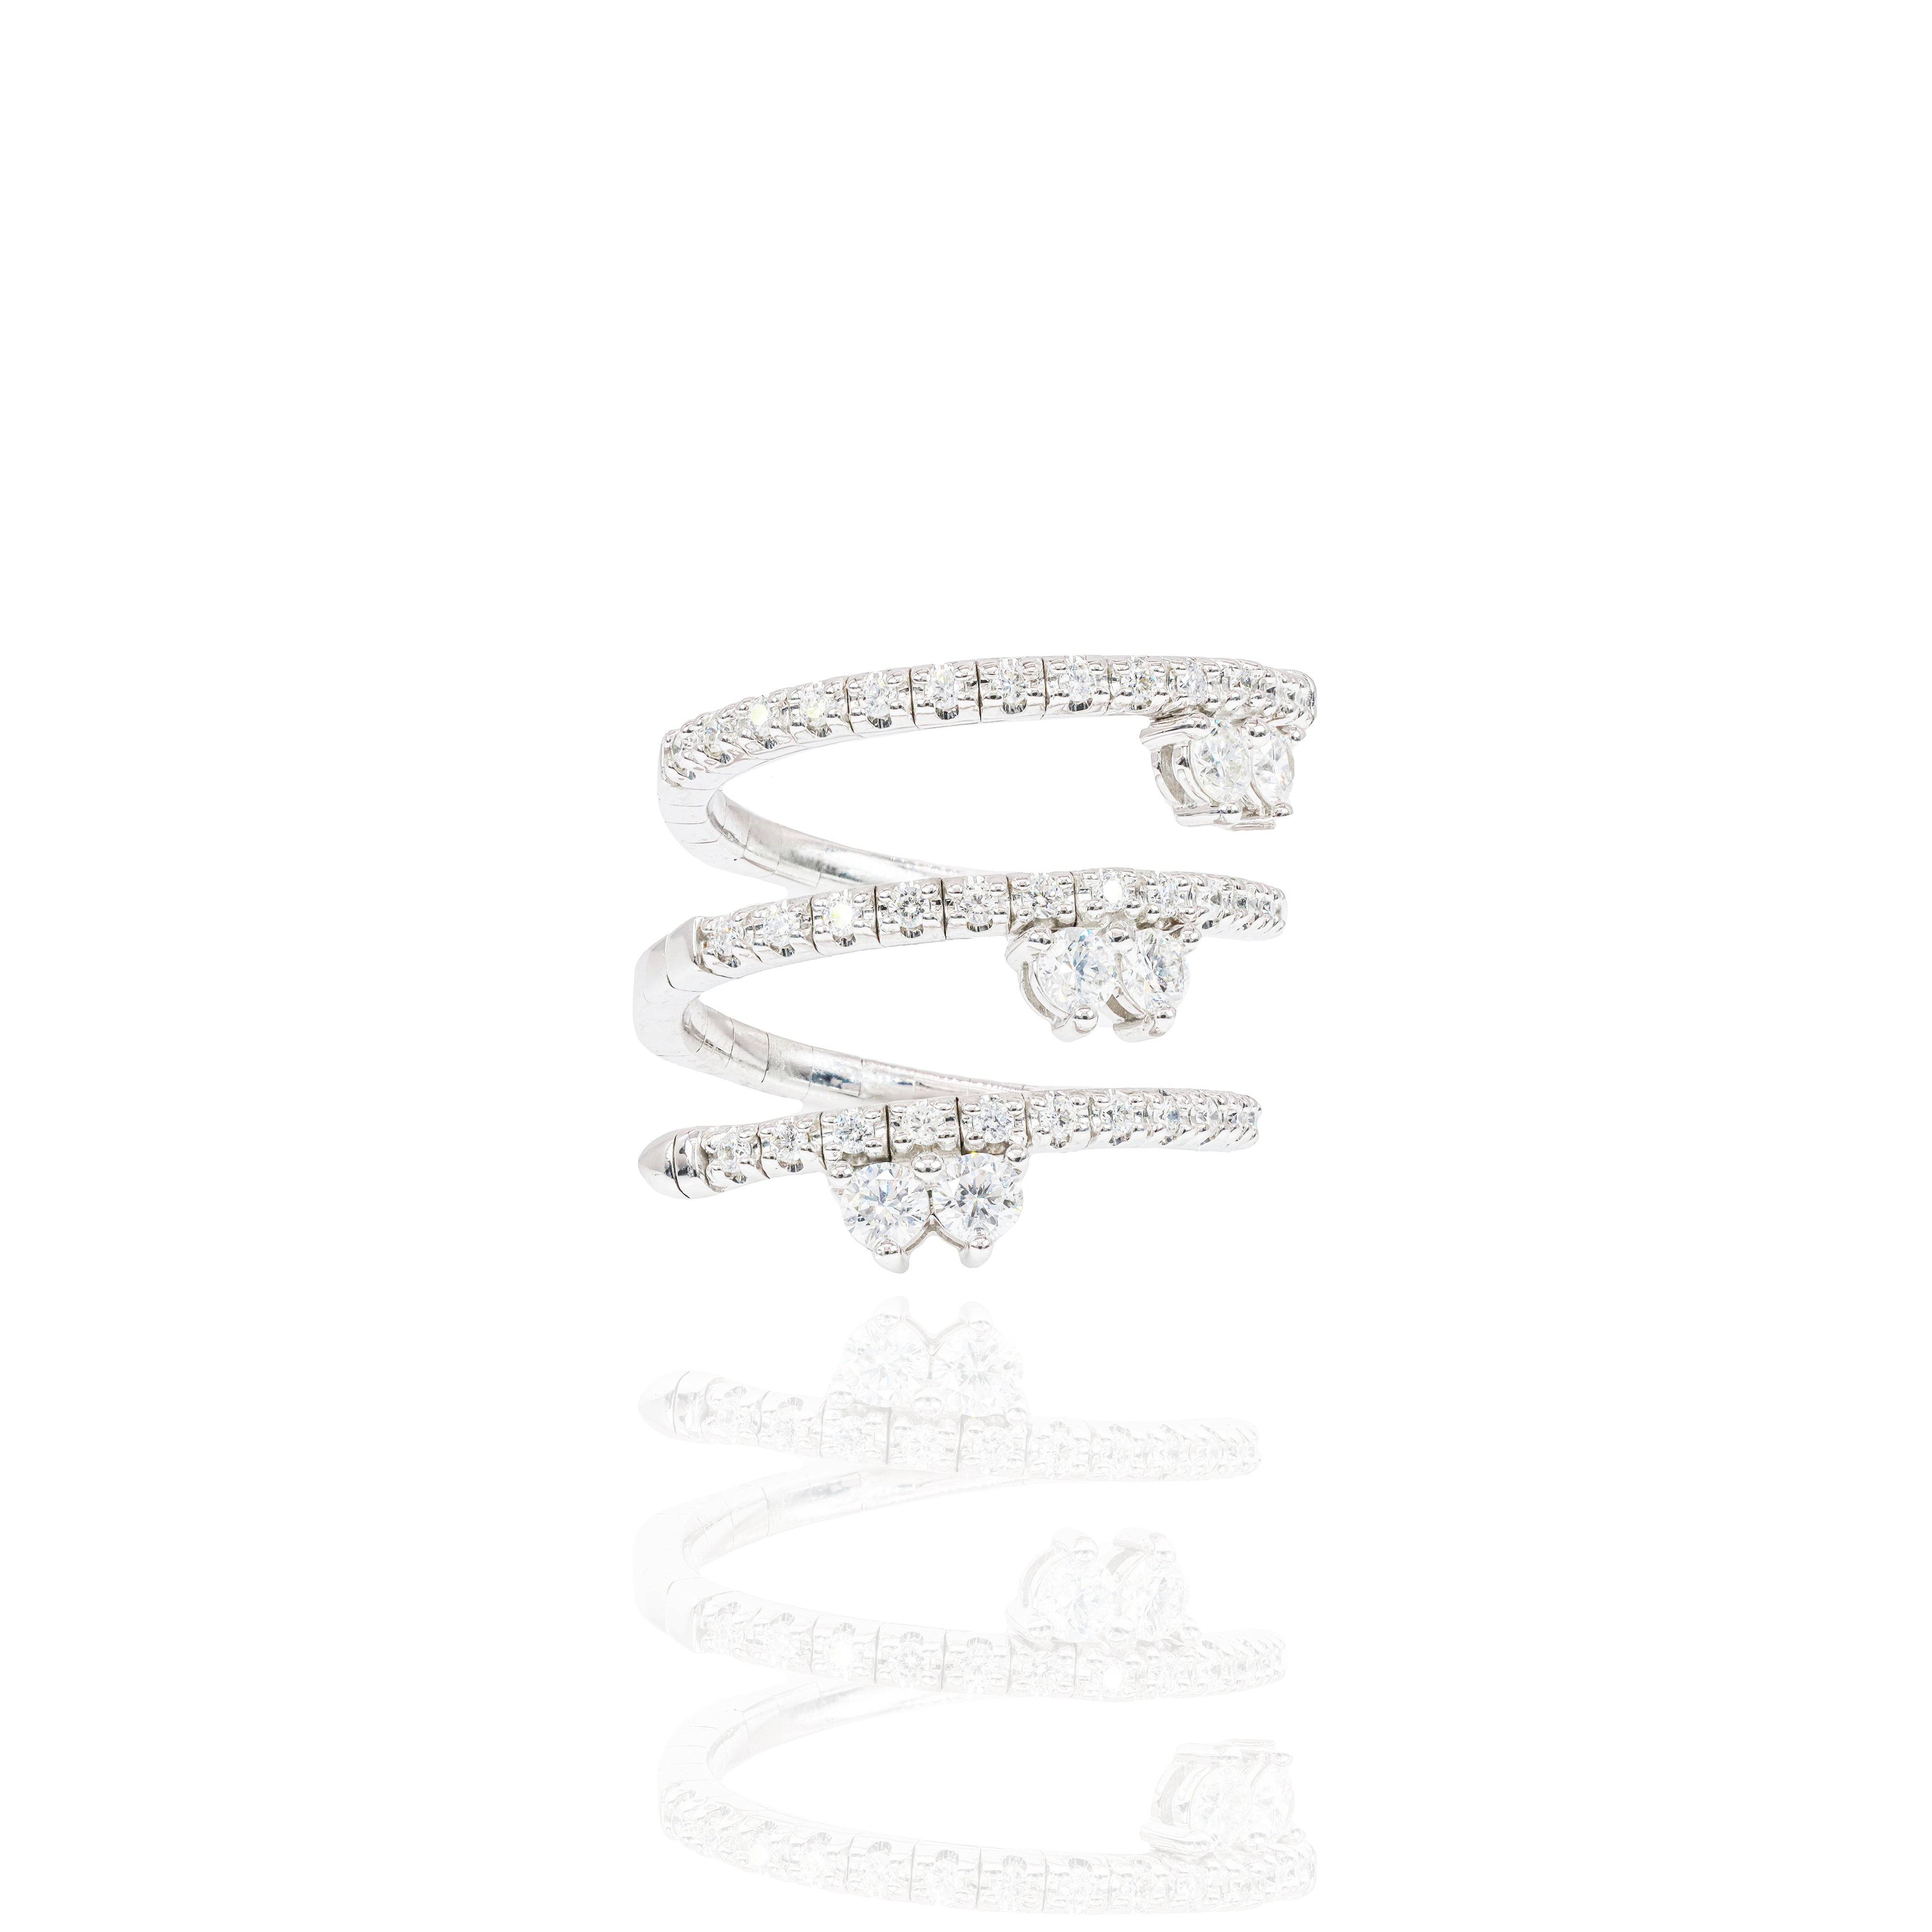 Diamond Spiral Ring